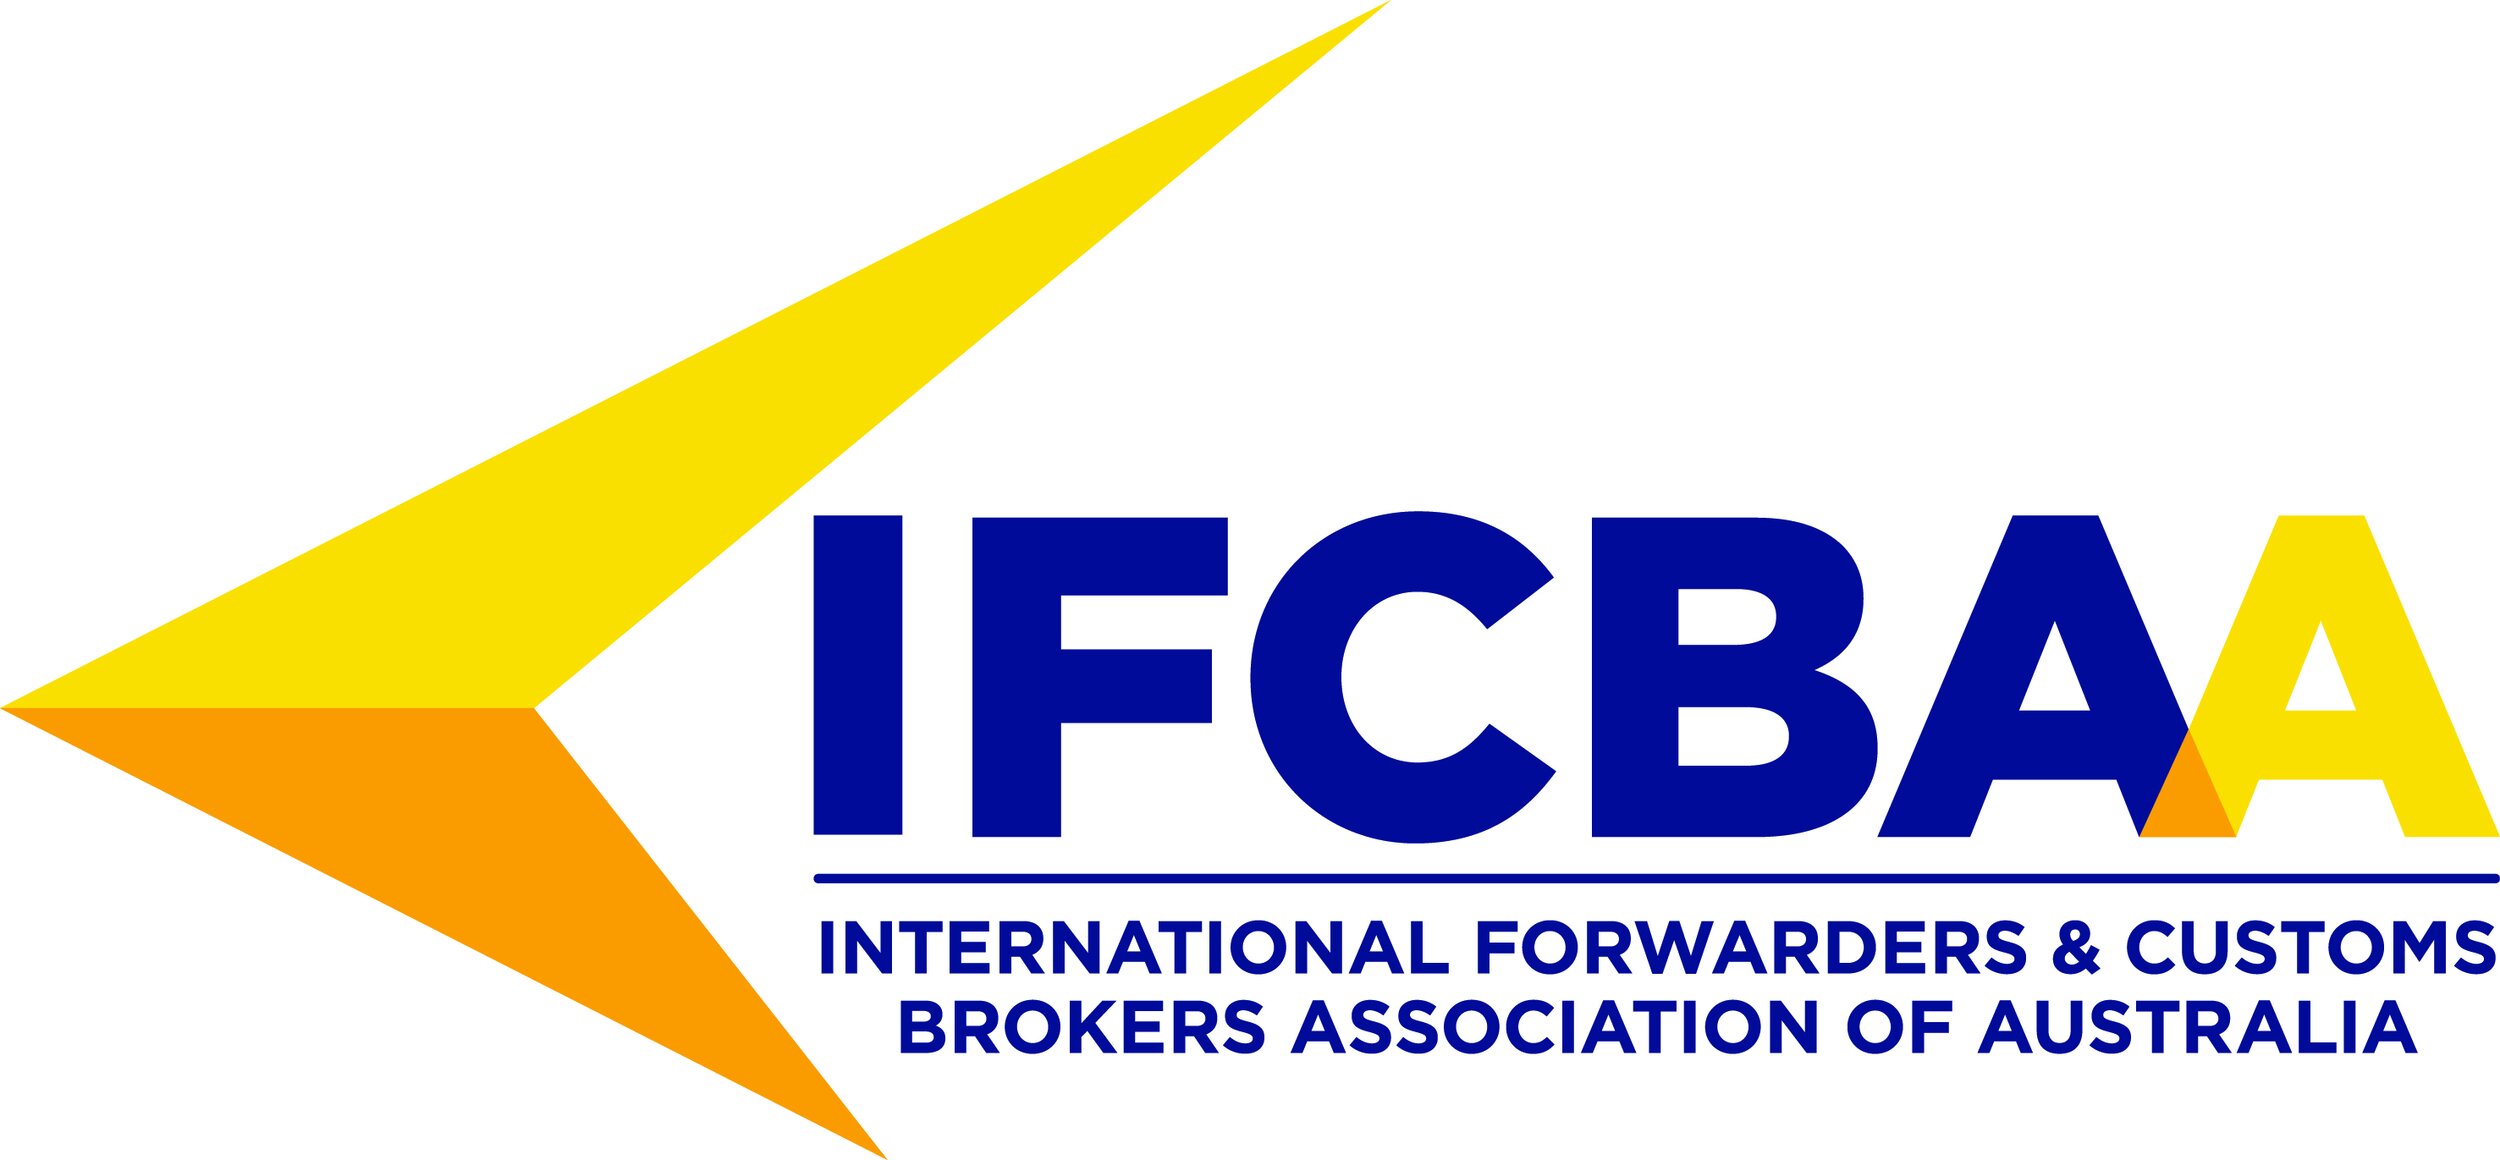 IFCBAA-Primary-Logo-CMYK.jpg